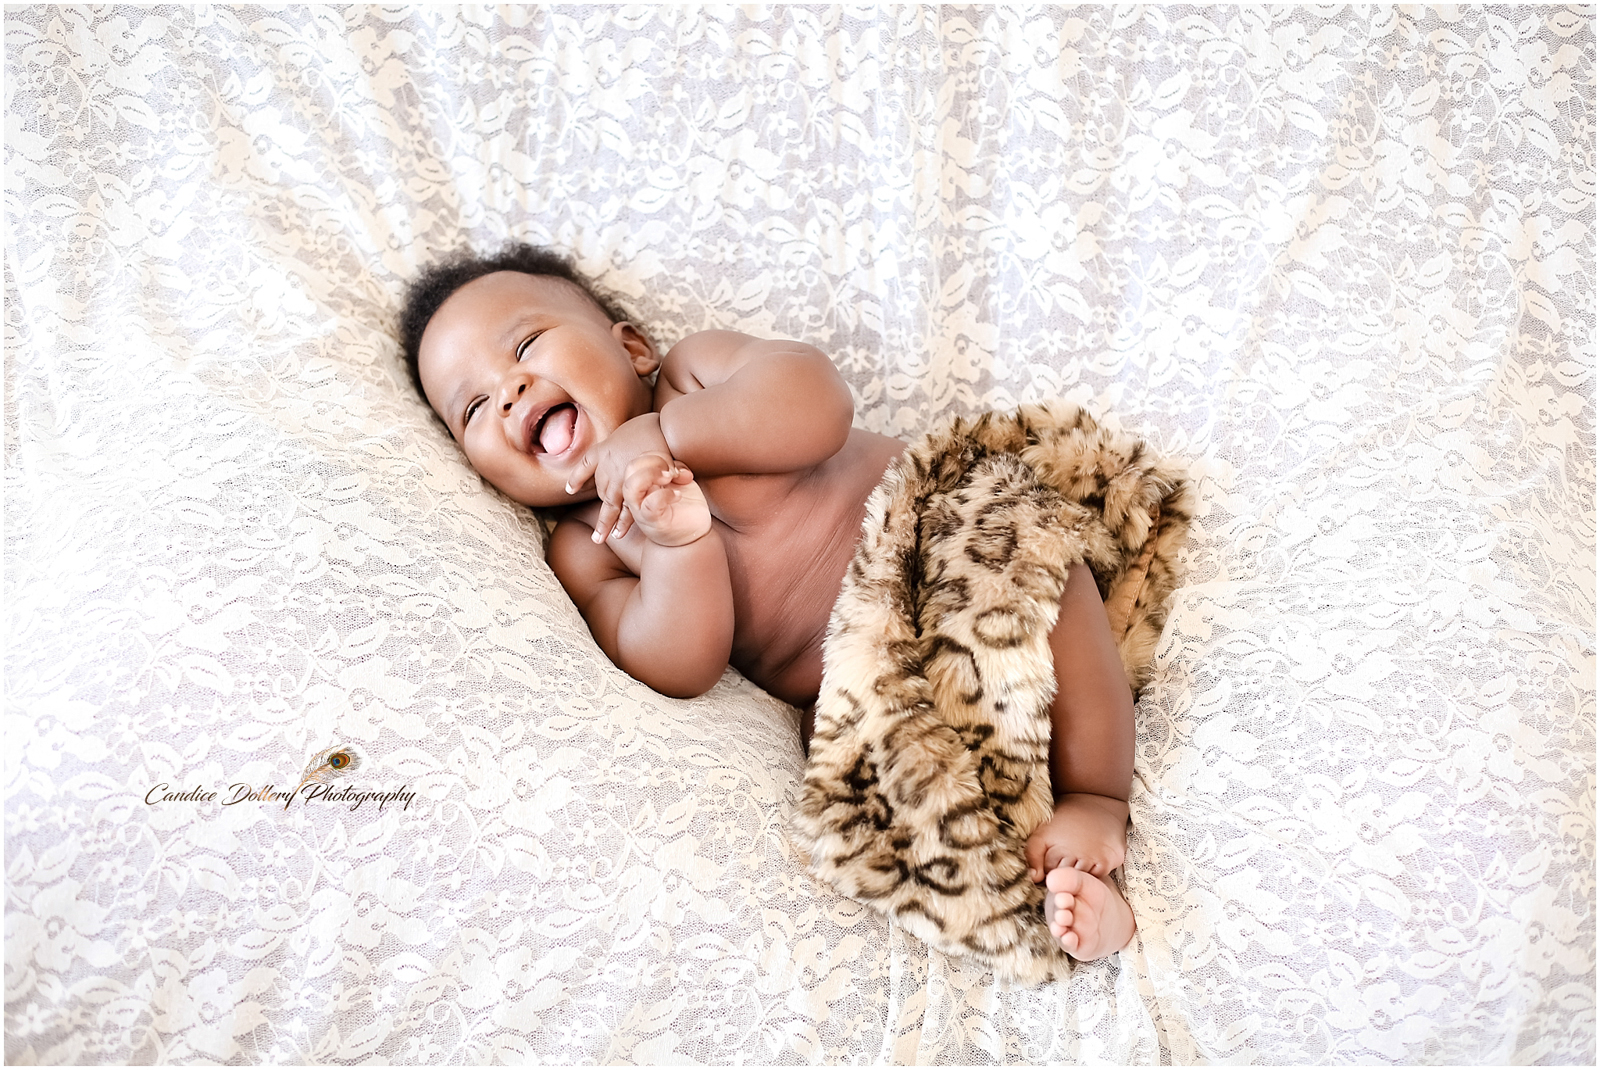 Baby Landile - Candice Dollery Photography_1188